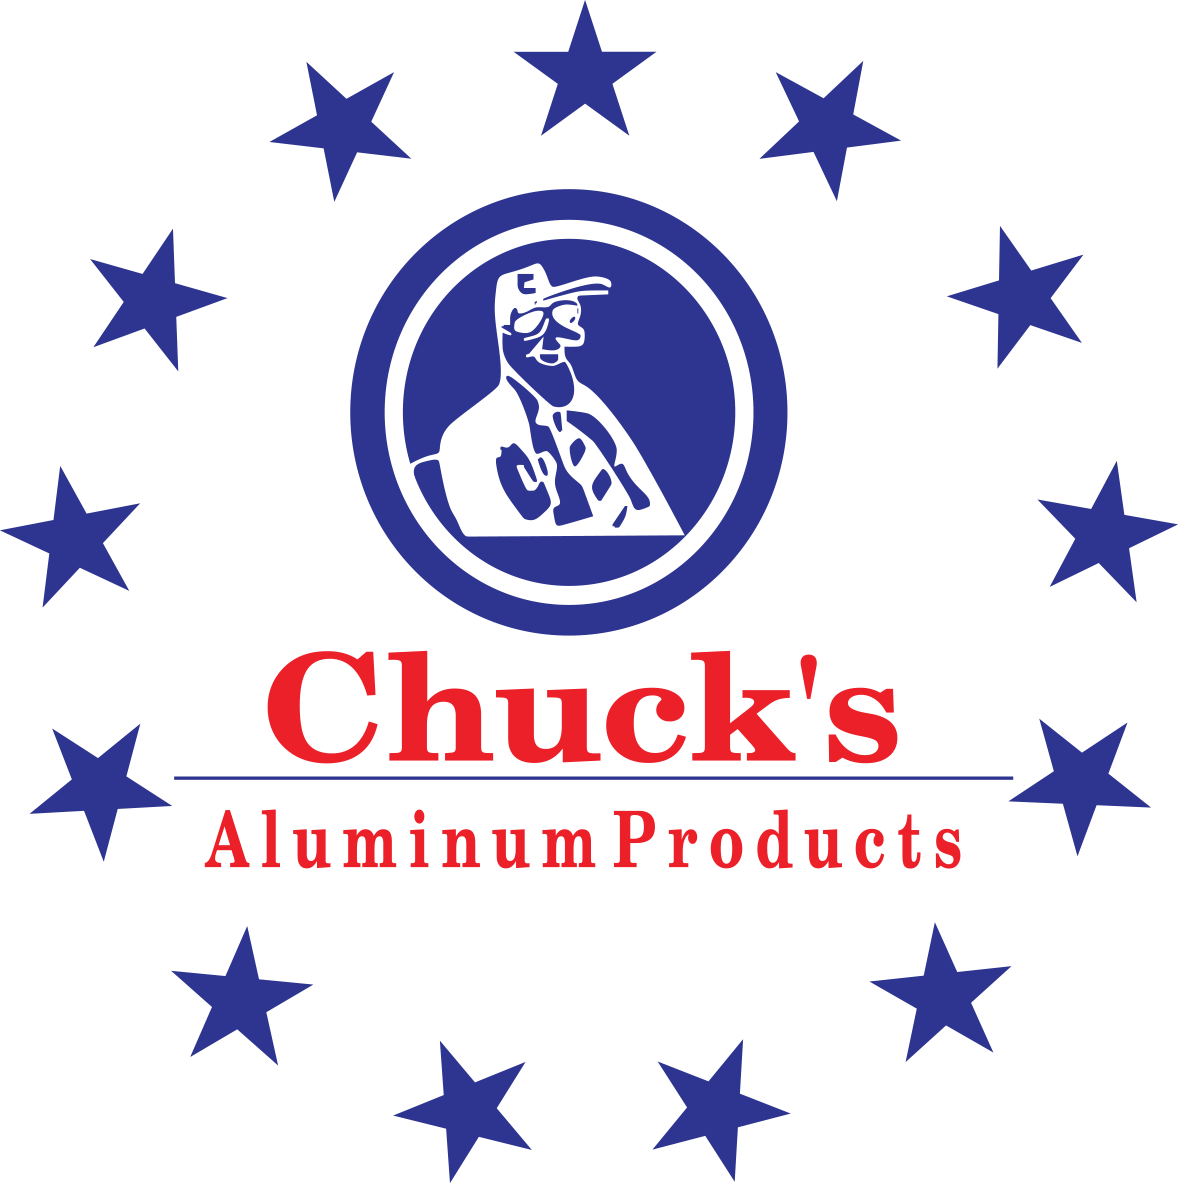 Chuck’s Aluminum Products